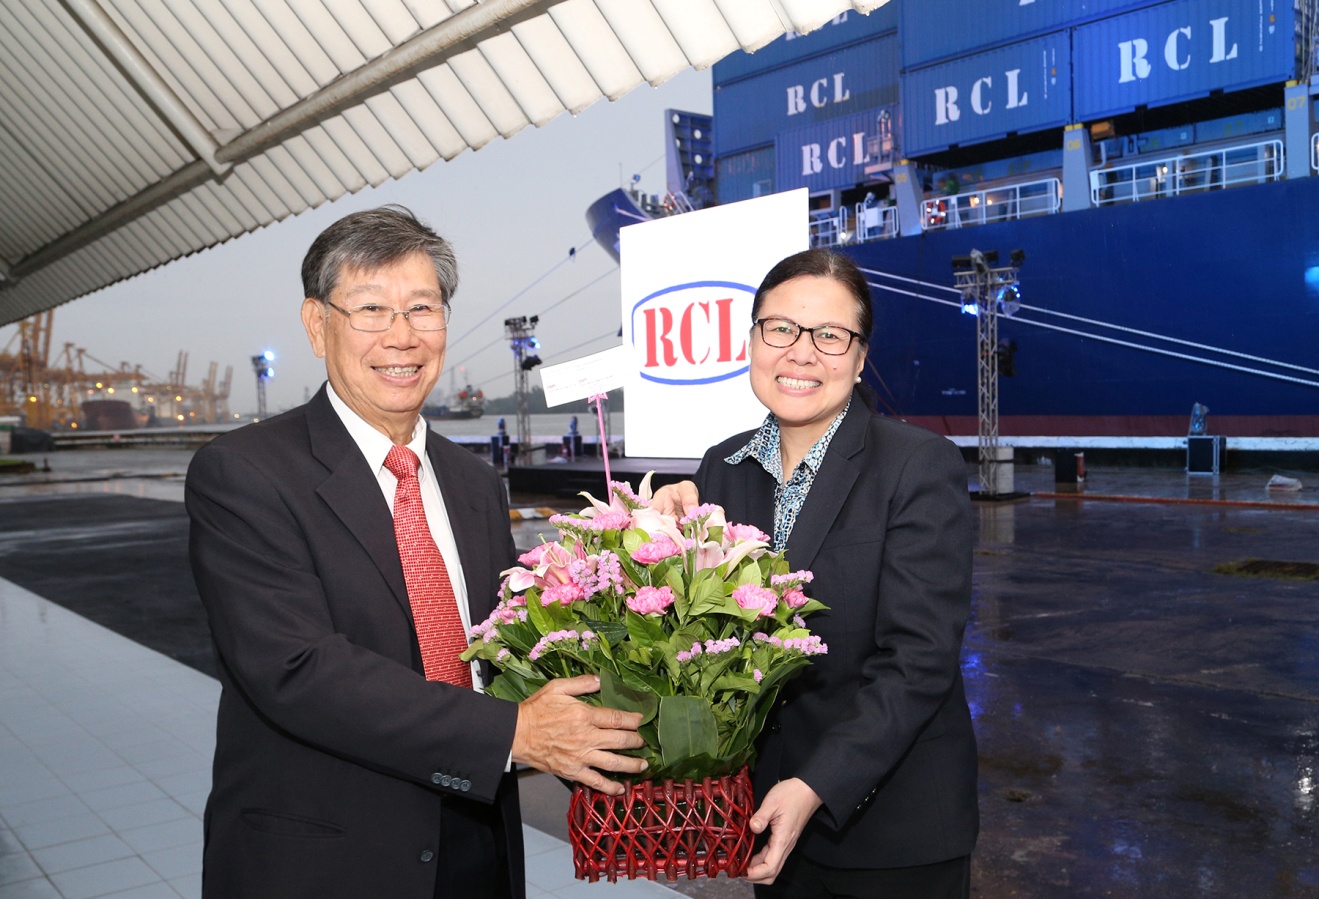 EXIM Thailand Congratulates the Inauguration of Jaru Bhum Container Ship of Regional Container Lines PLC.